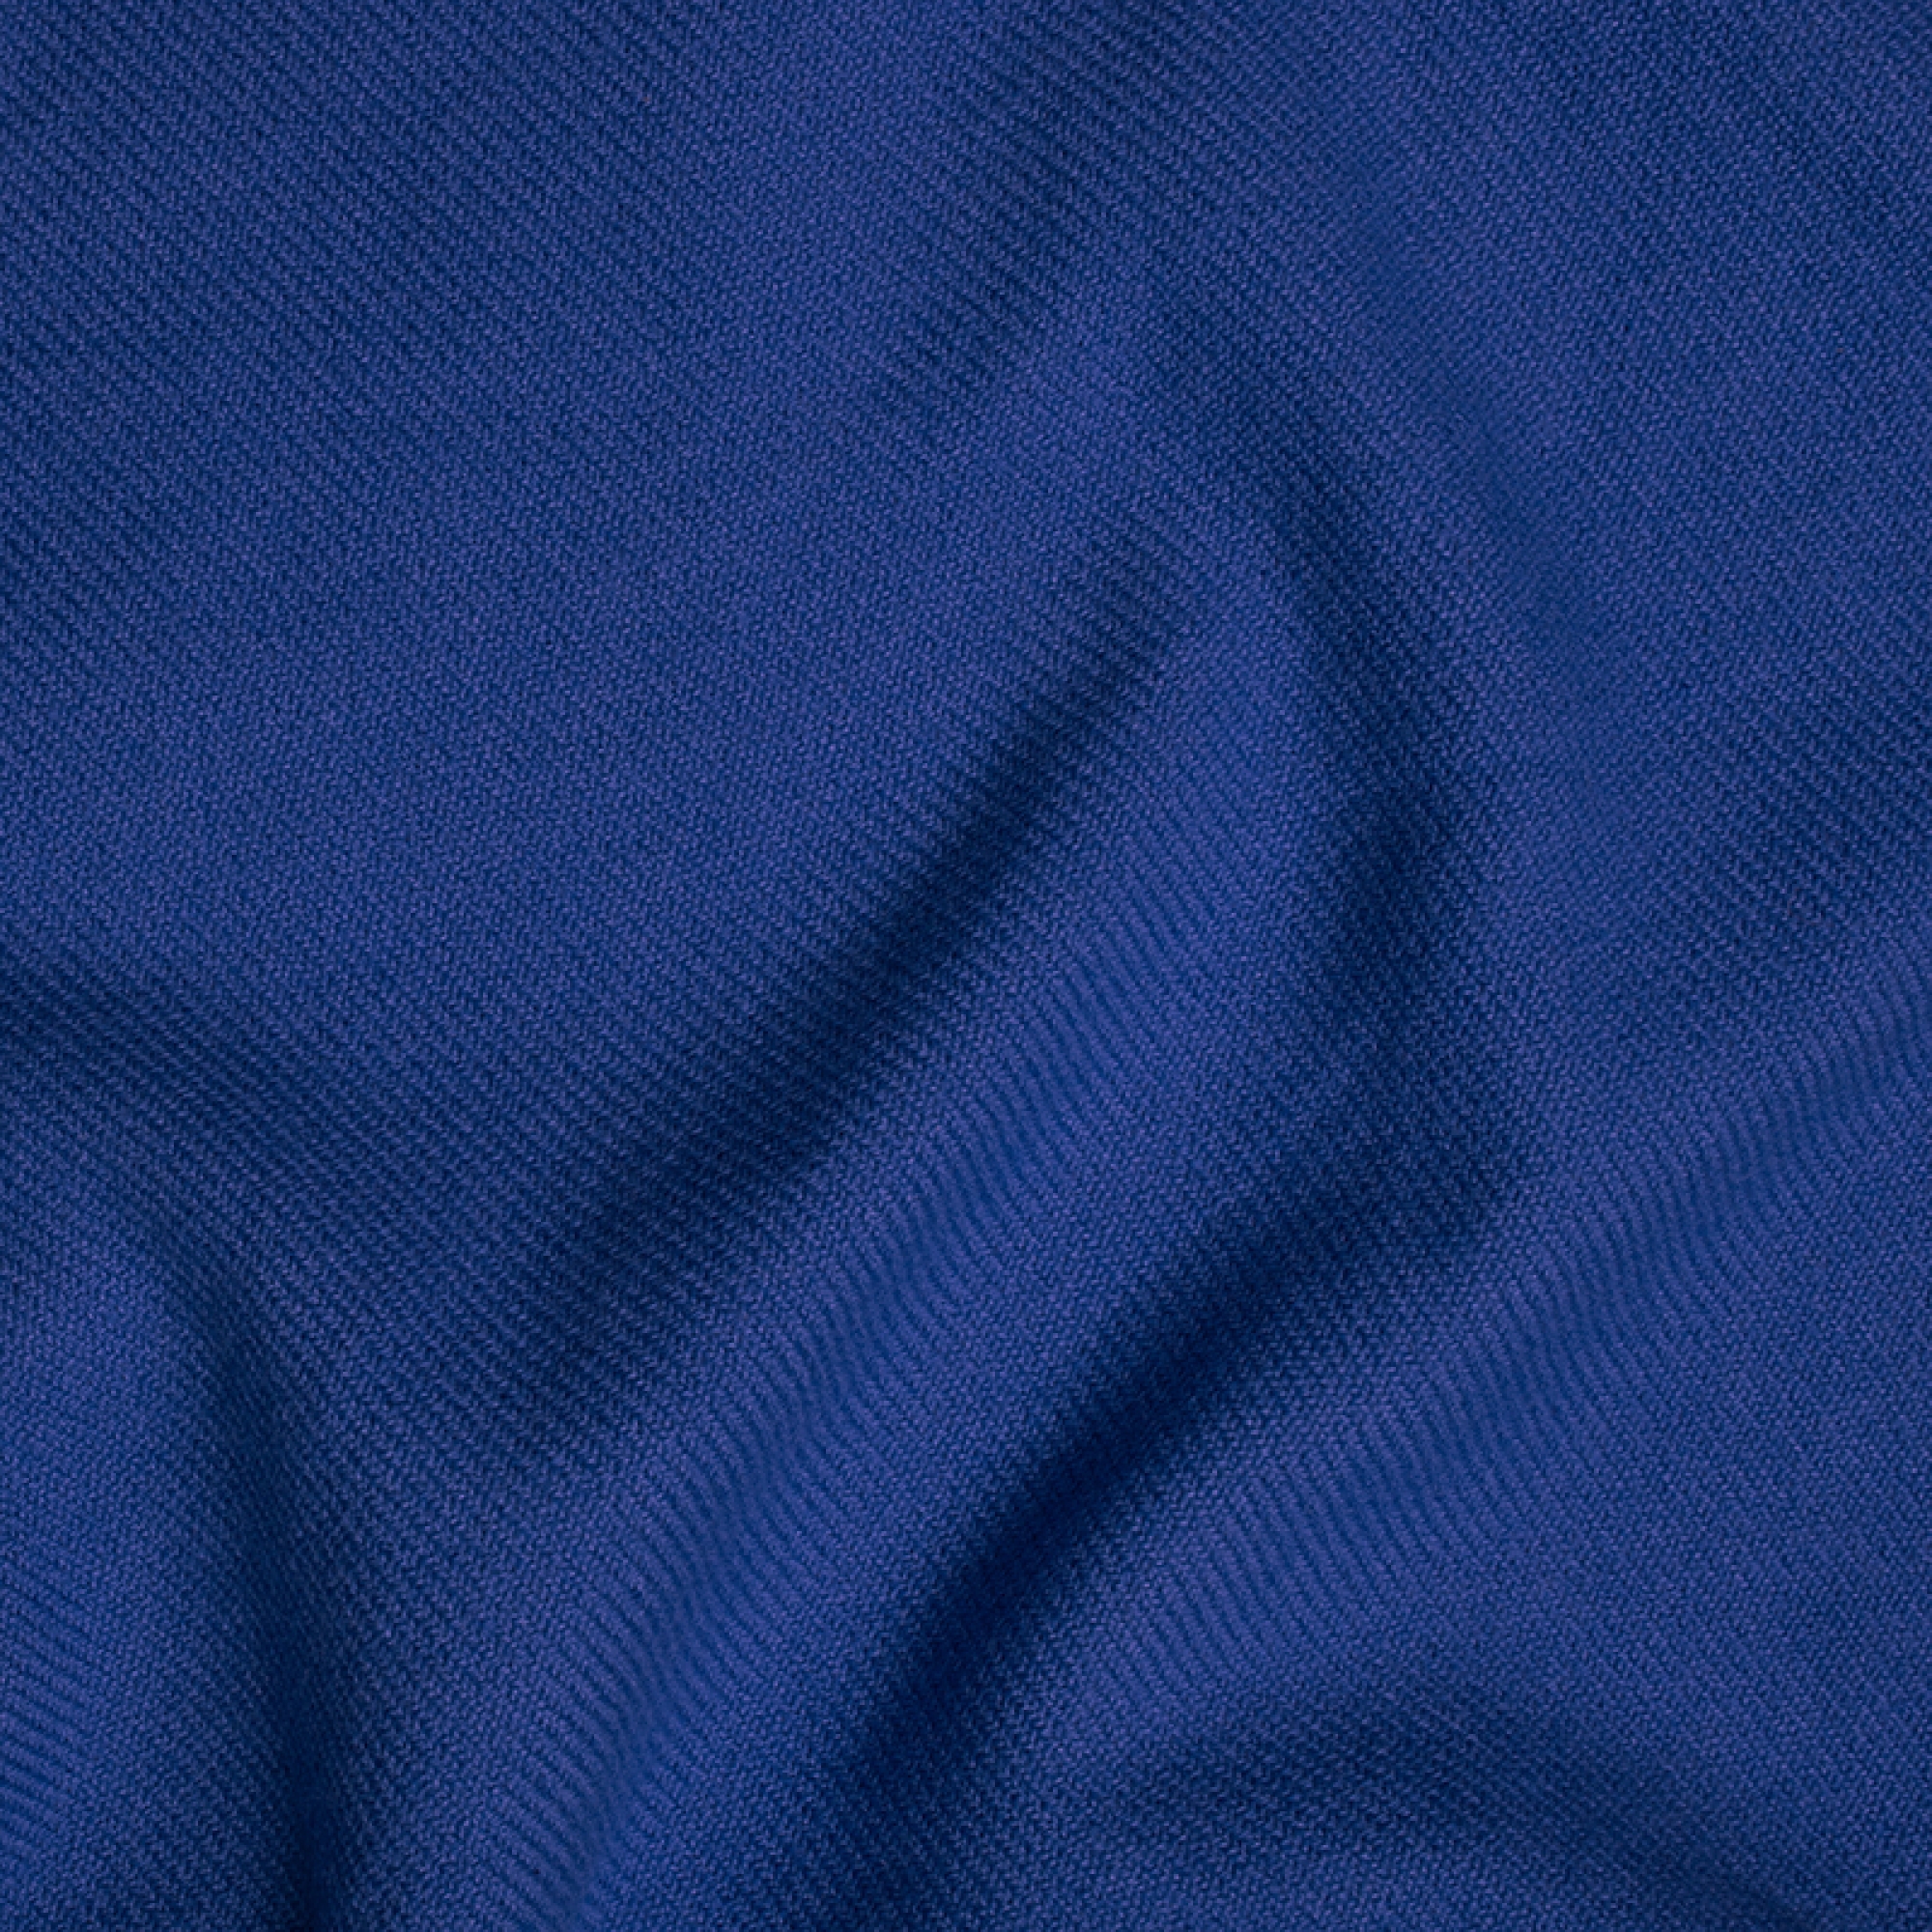 Cachemire pull femme toodoo plain xl 240 x 260 bleuet 240 x 260 cm